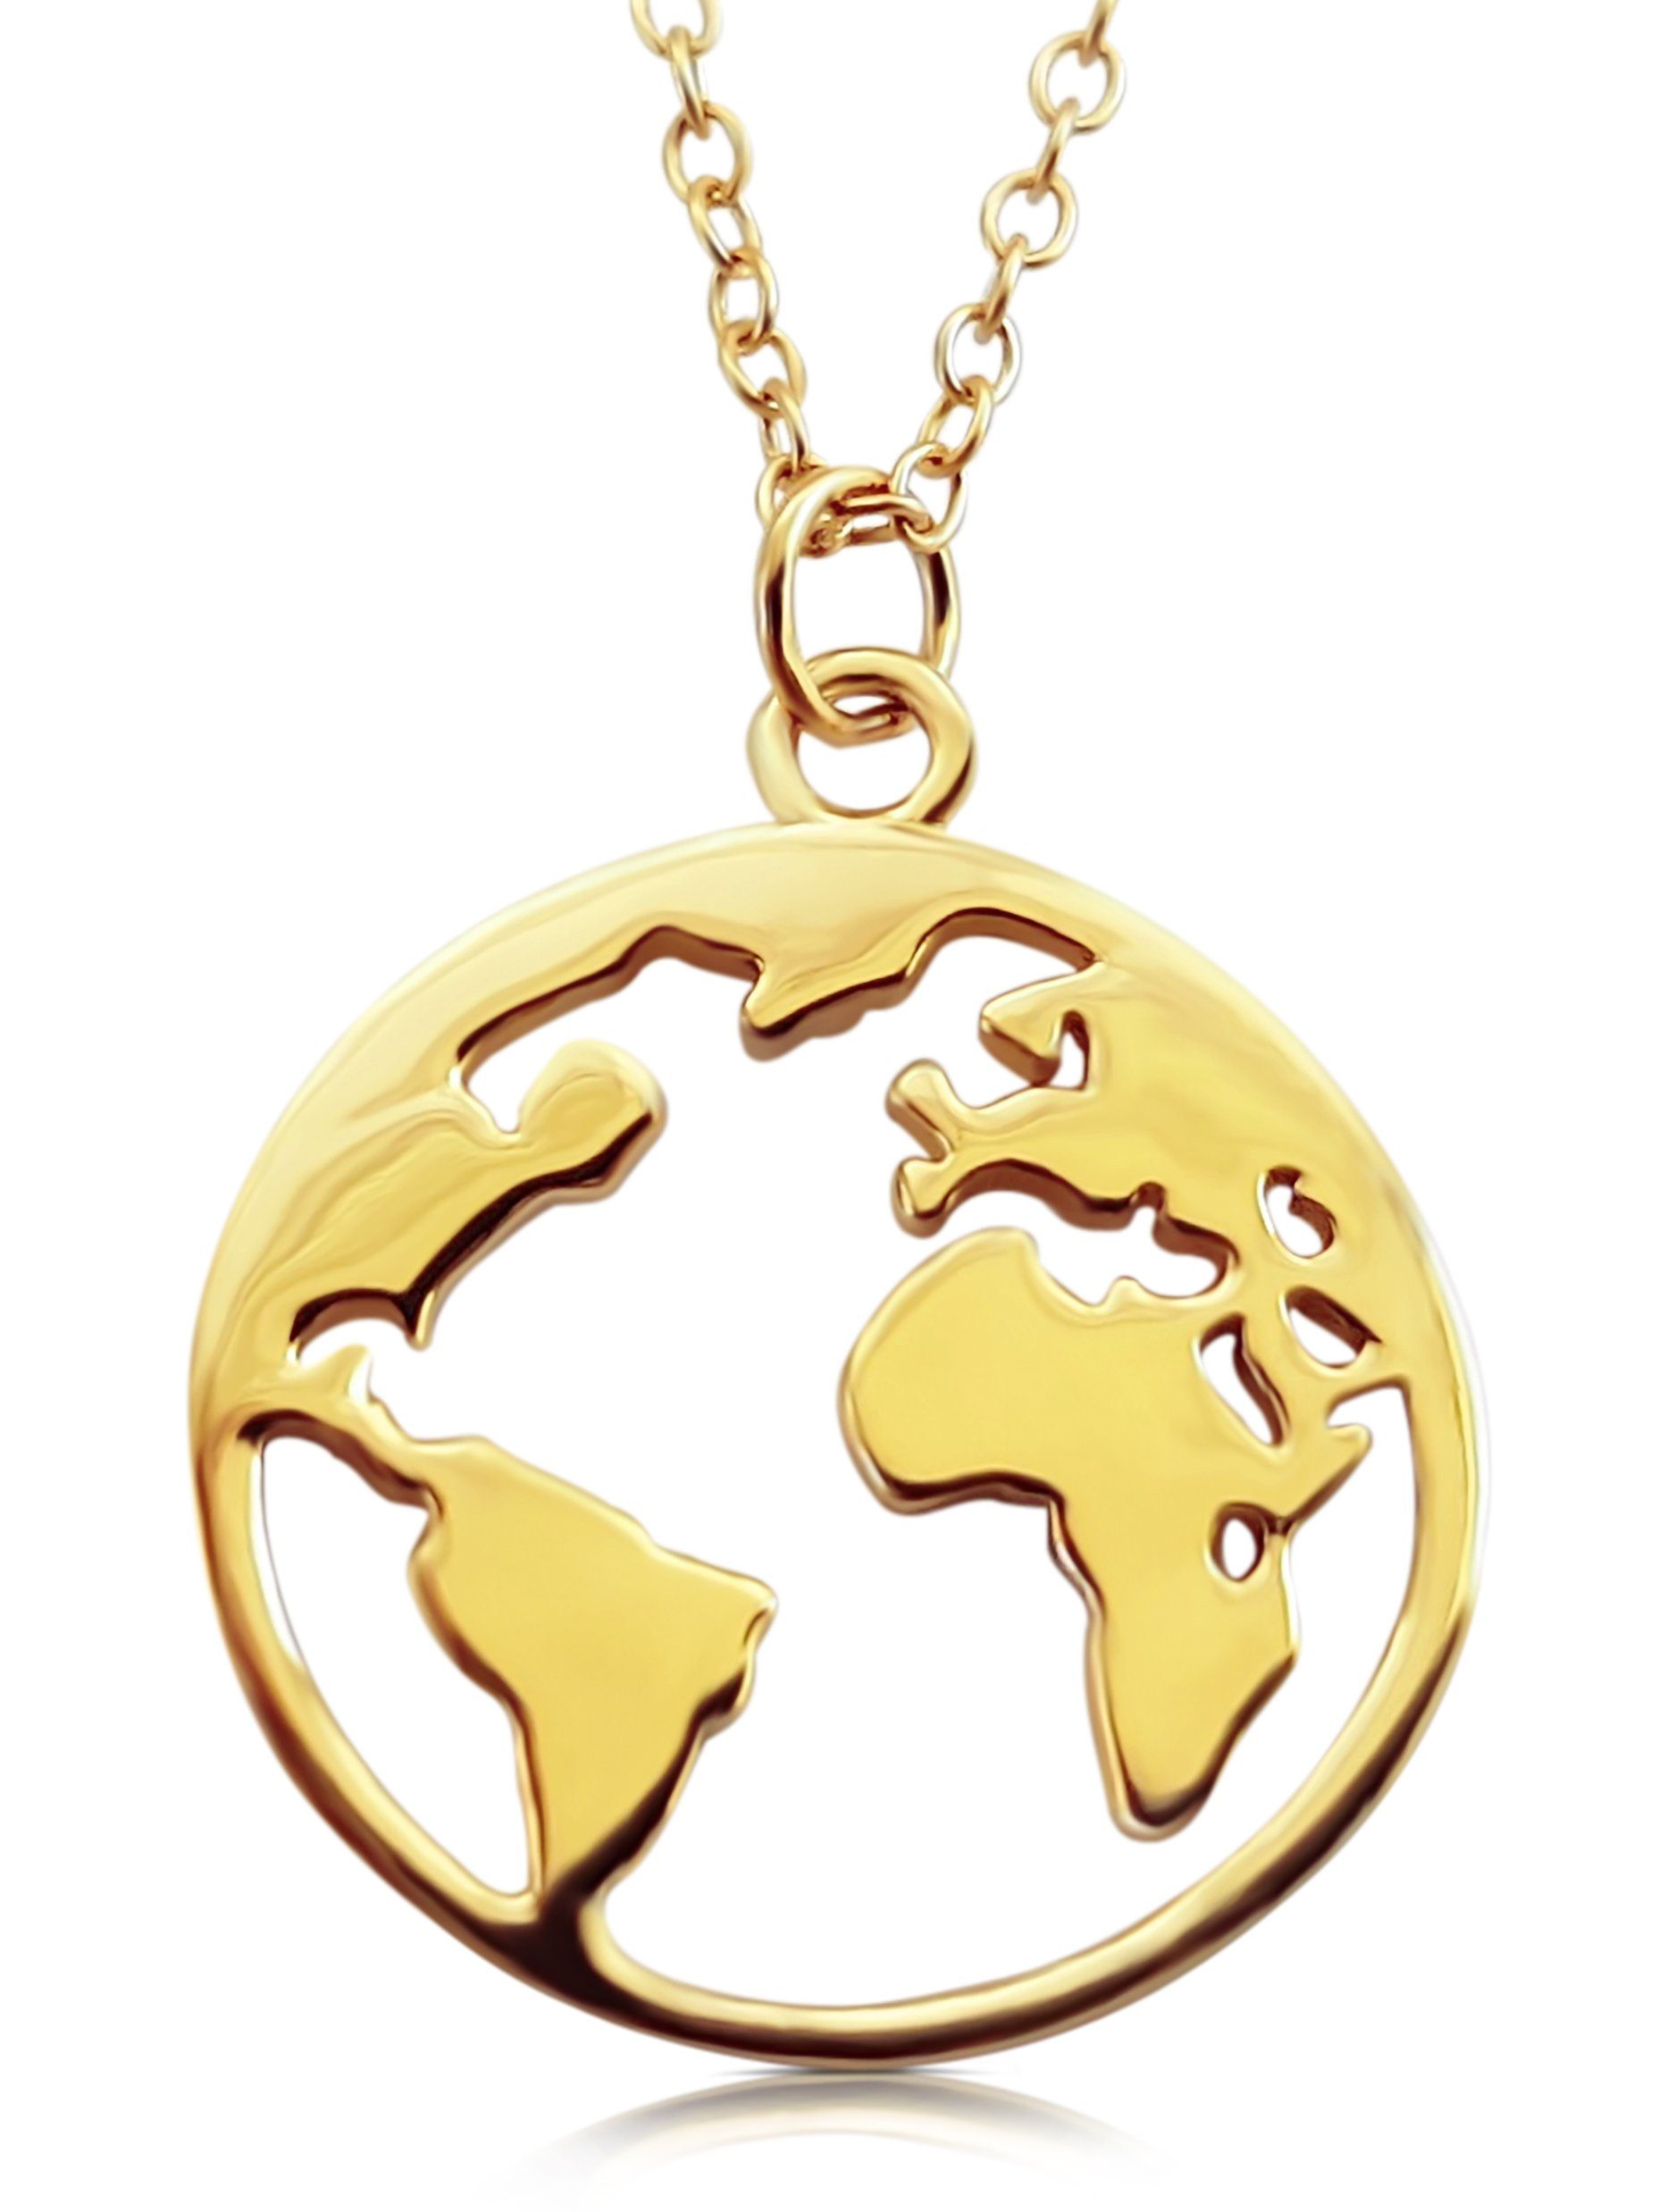 VIASOUL Kette mit Anhänger Weltkugel I Weltkarte Halskette für Damen Welt I Mit Zertifikat, stahlender Glanz Gold